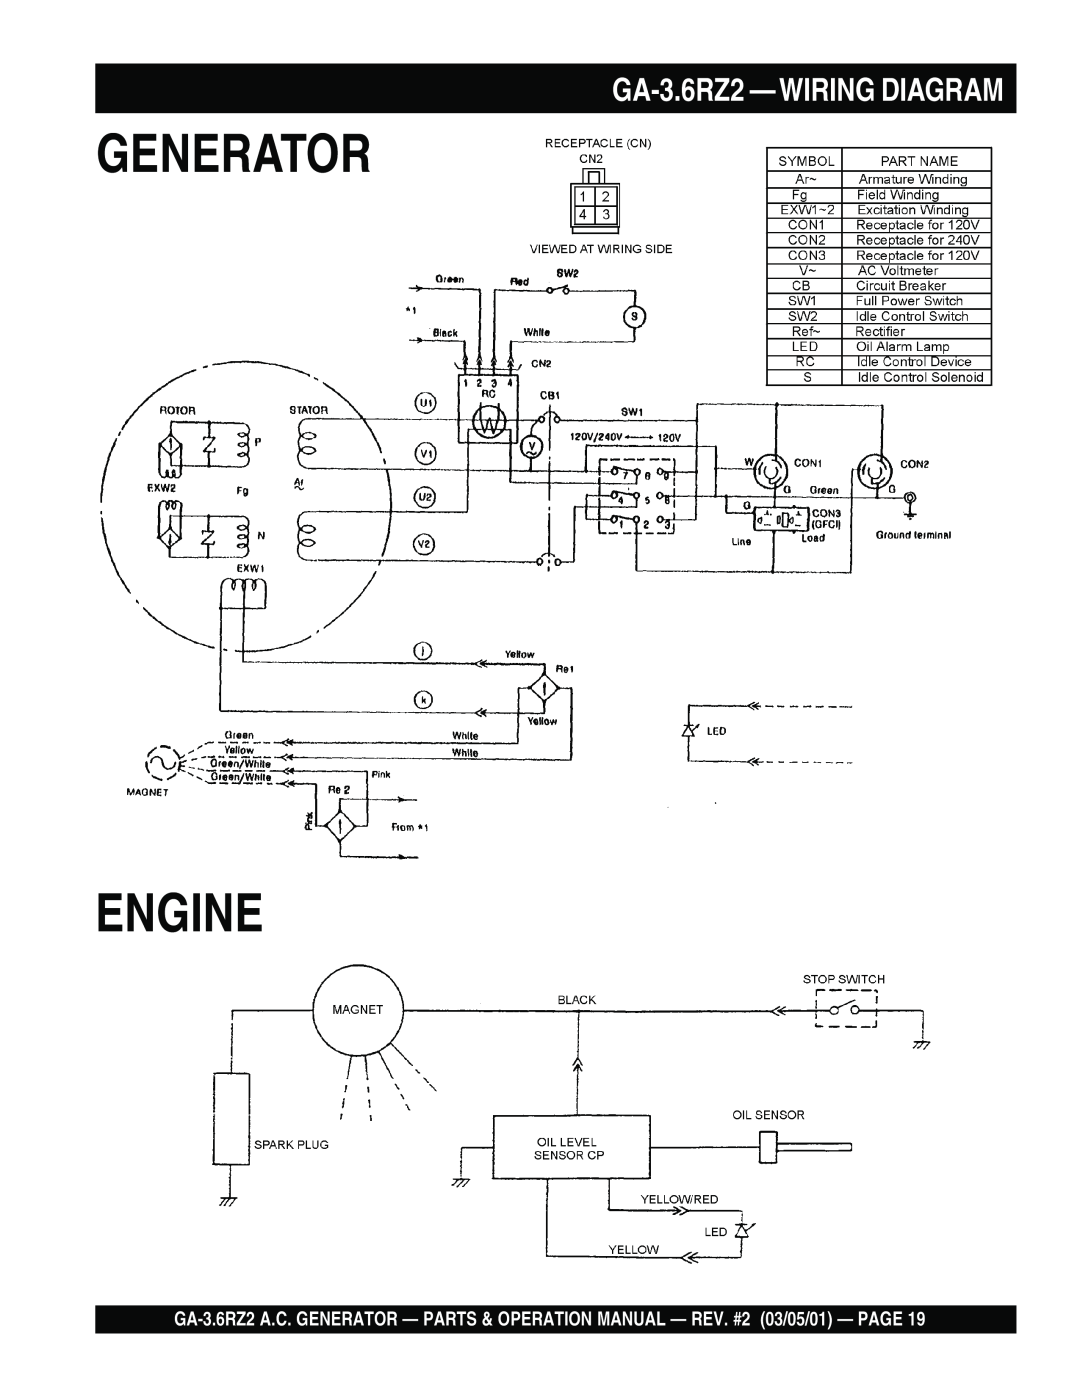 Multiquip operation manual Generator Engine, GA-3.6RZ2 —WIRINGDIAGRAM 